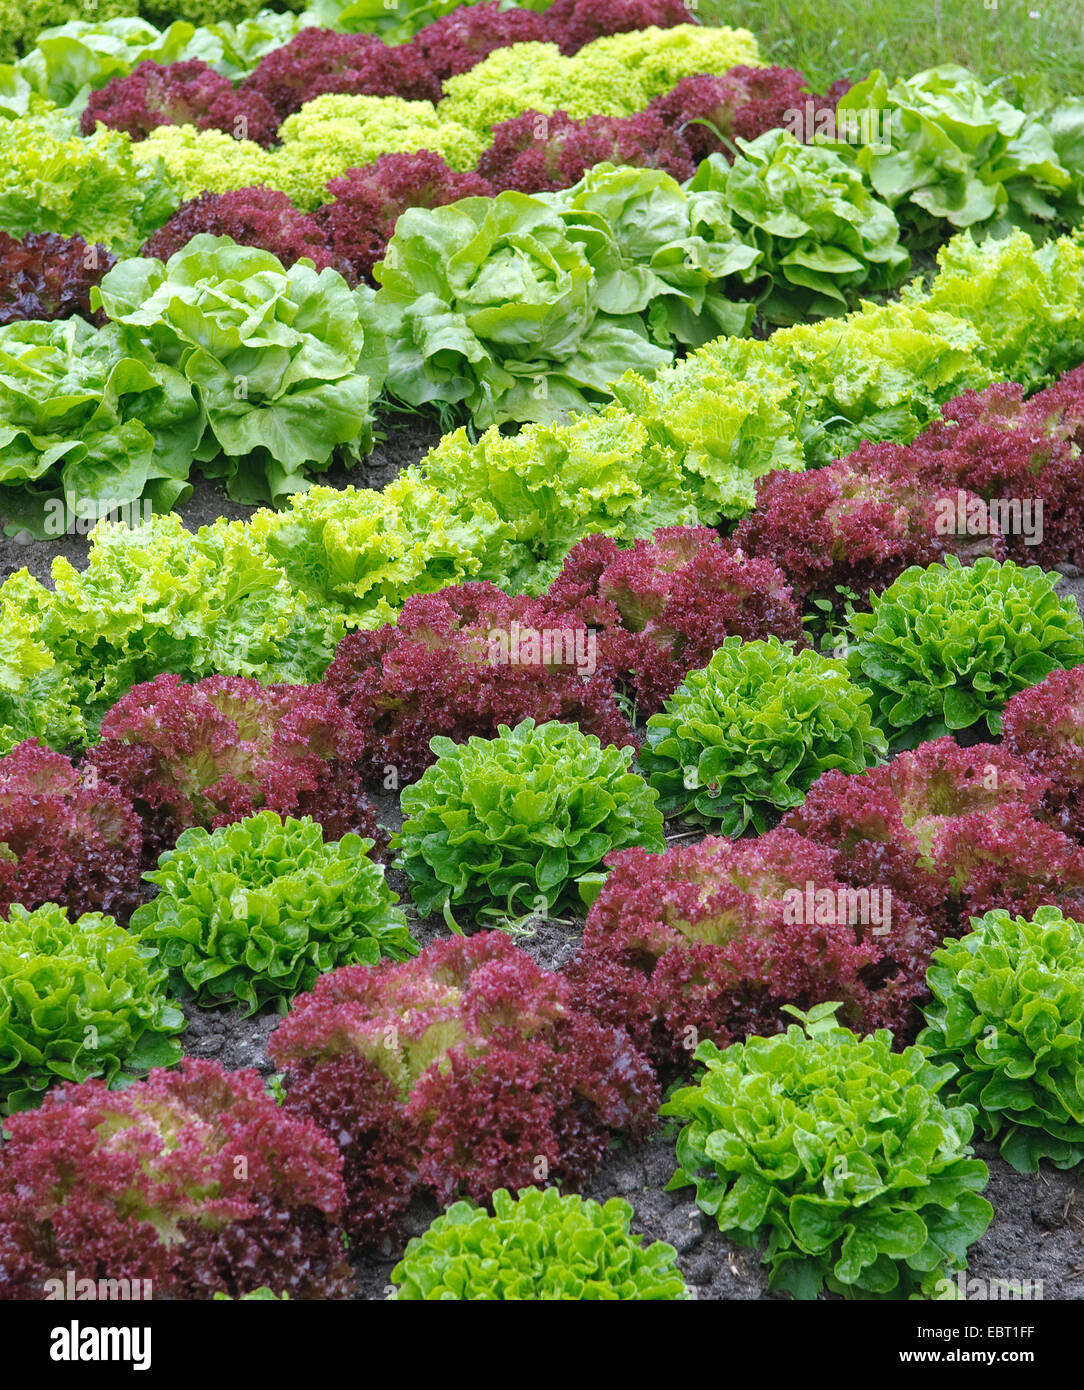 garden lettuce (Lactuca sativa crispa, Lactuca sativa var. crispa), vegetable patch Stock Photo